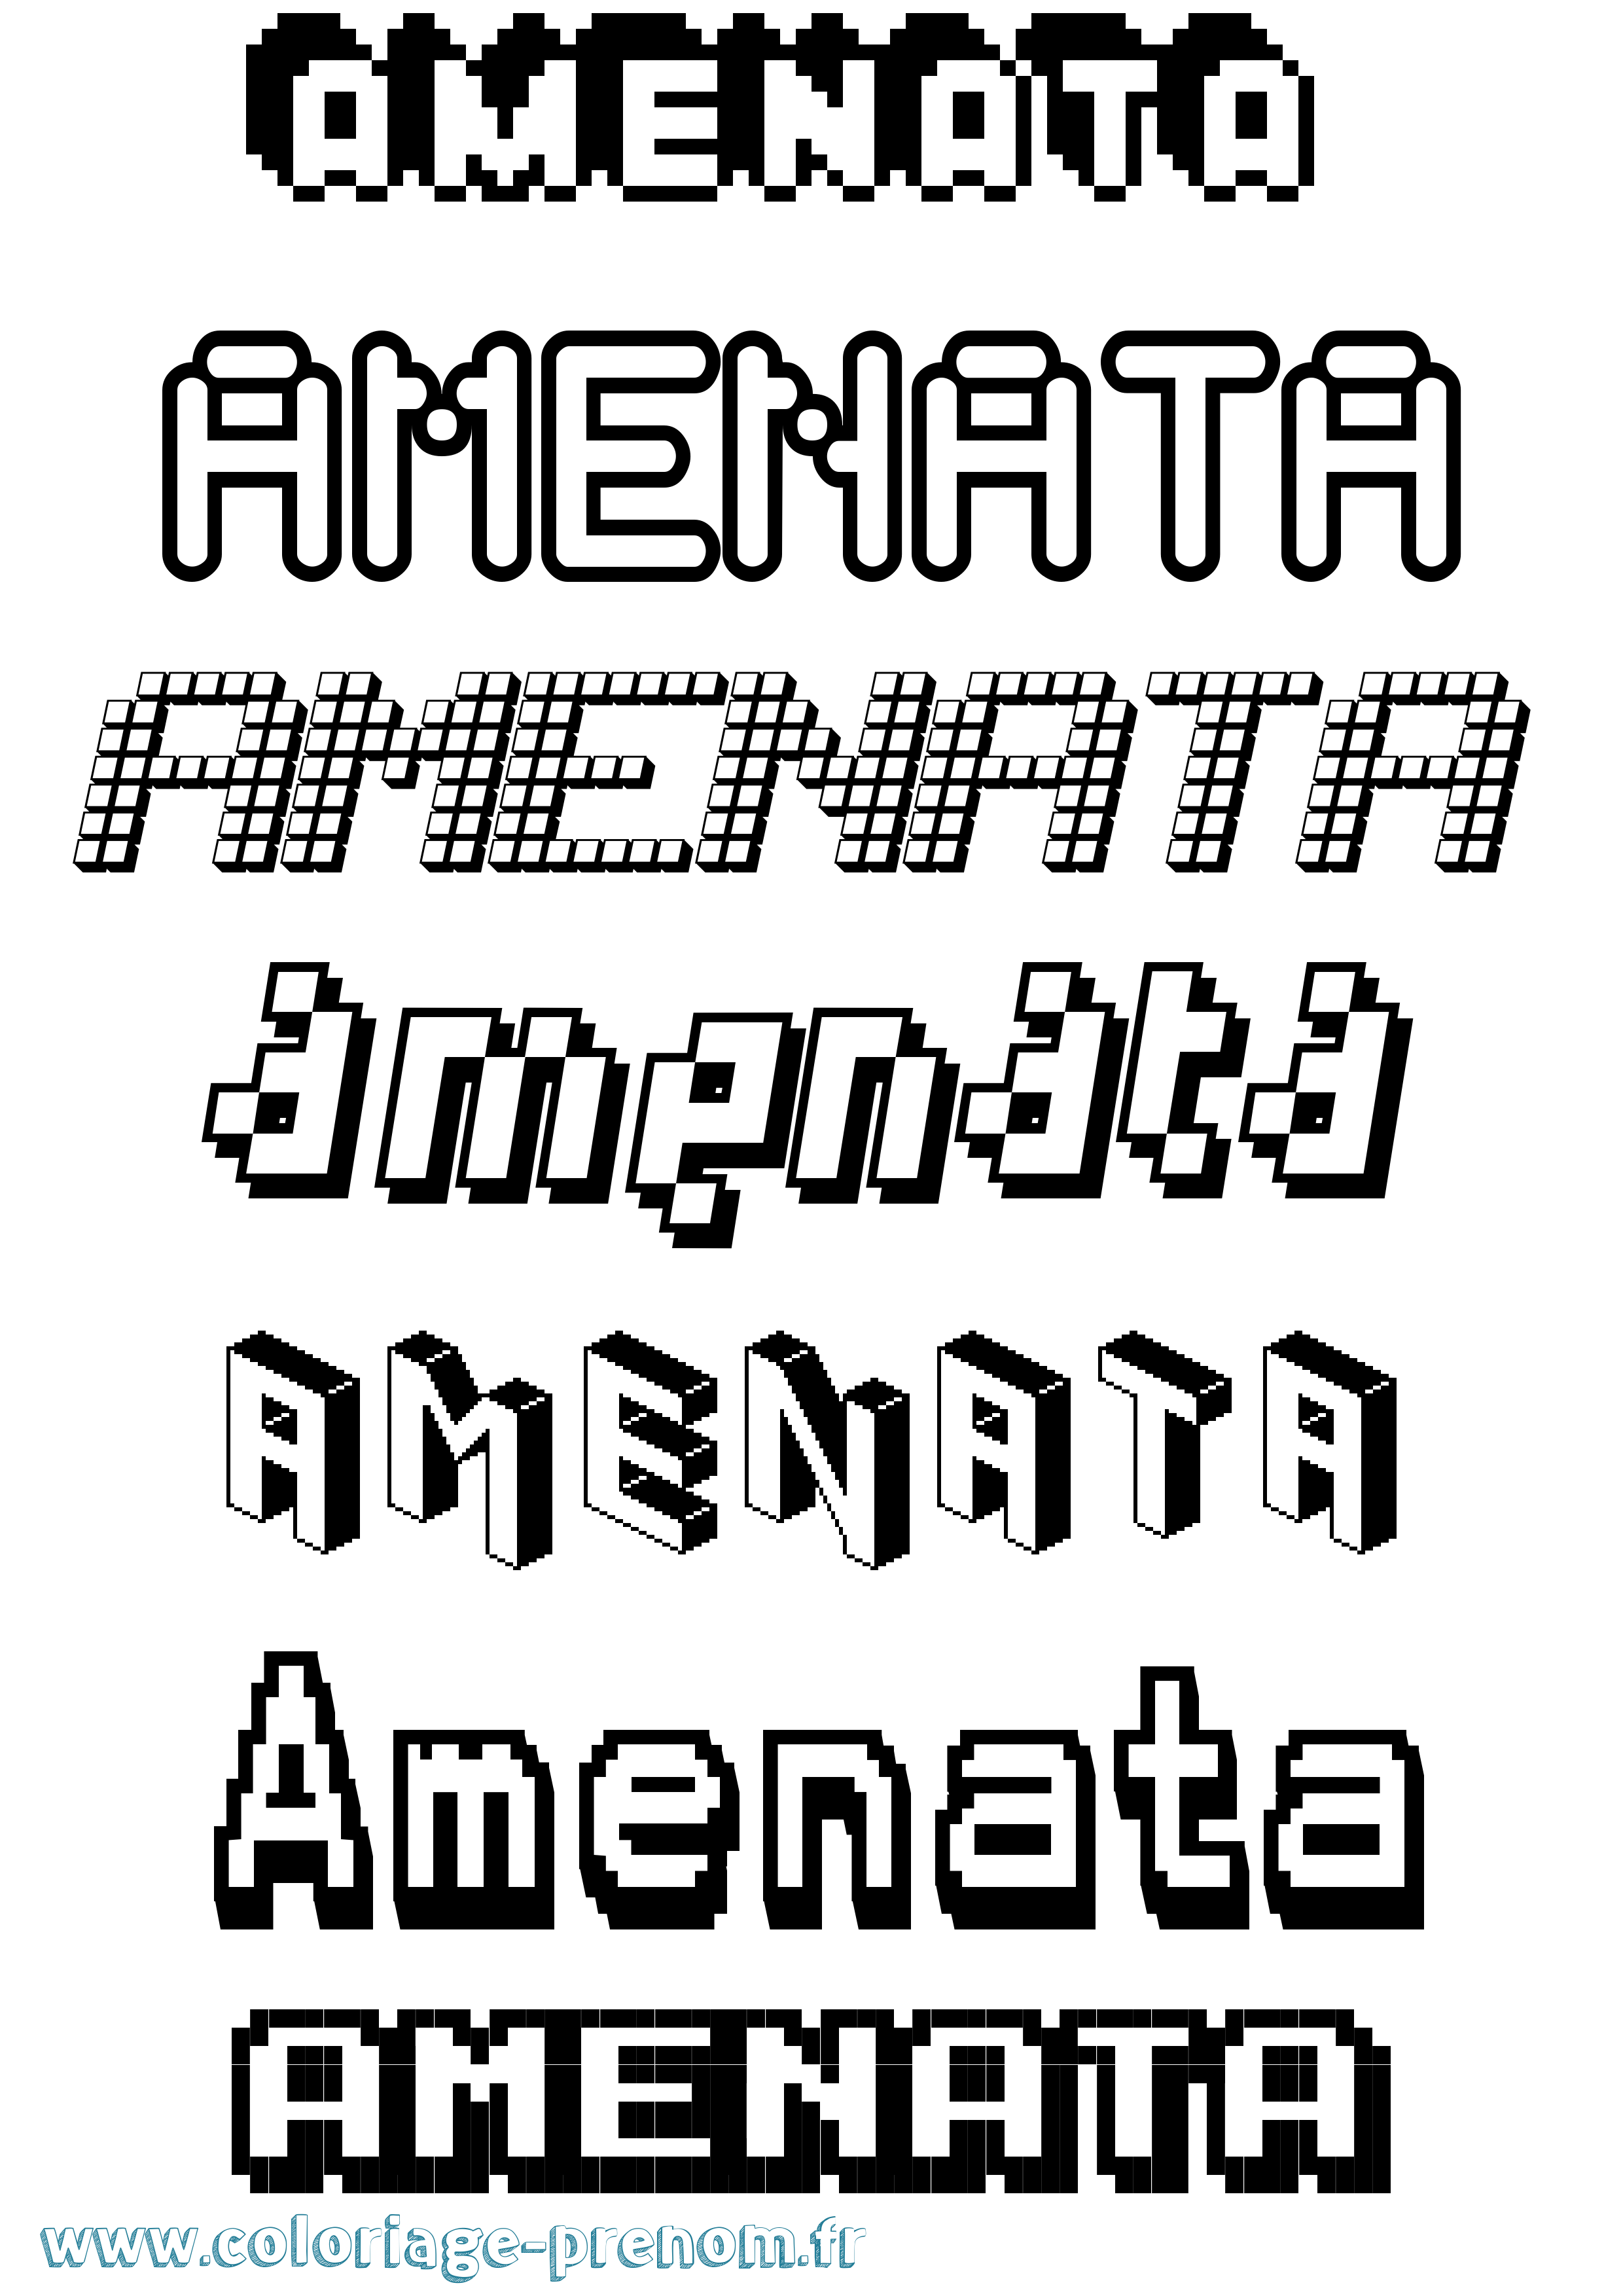 Coloriage prénom Amenata Pixel